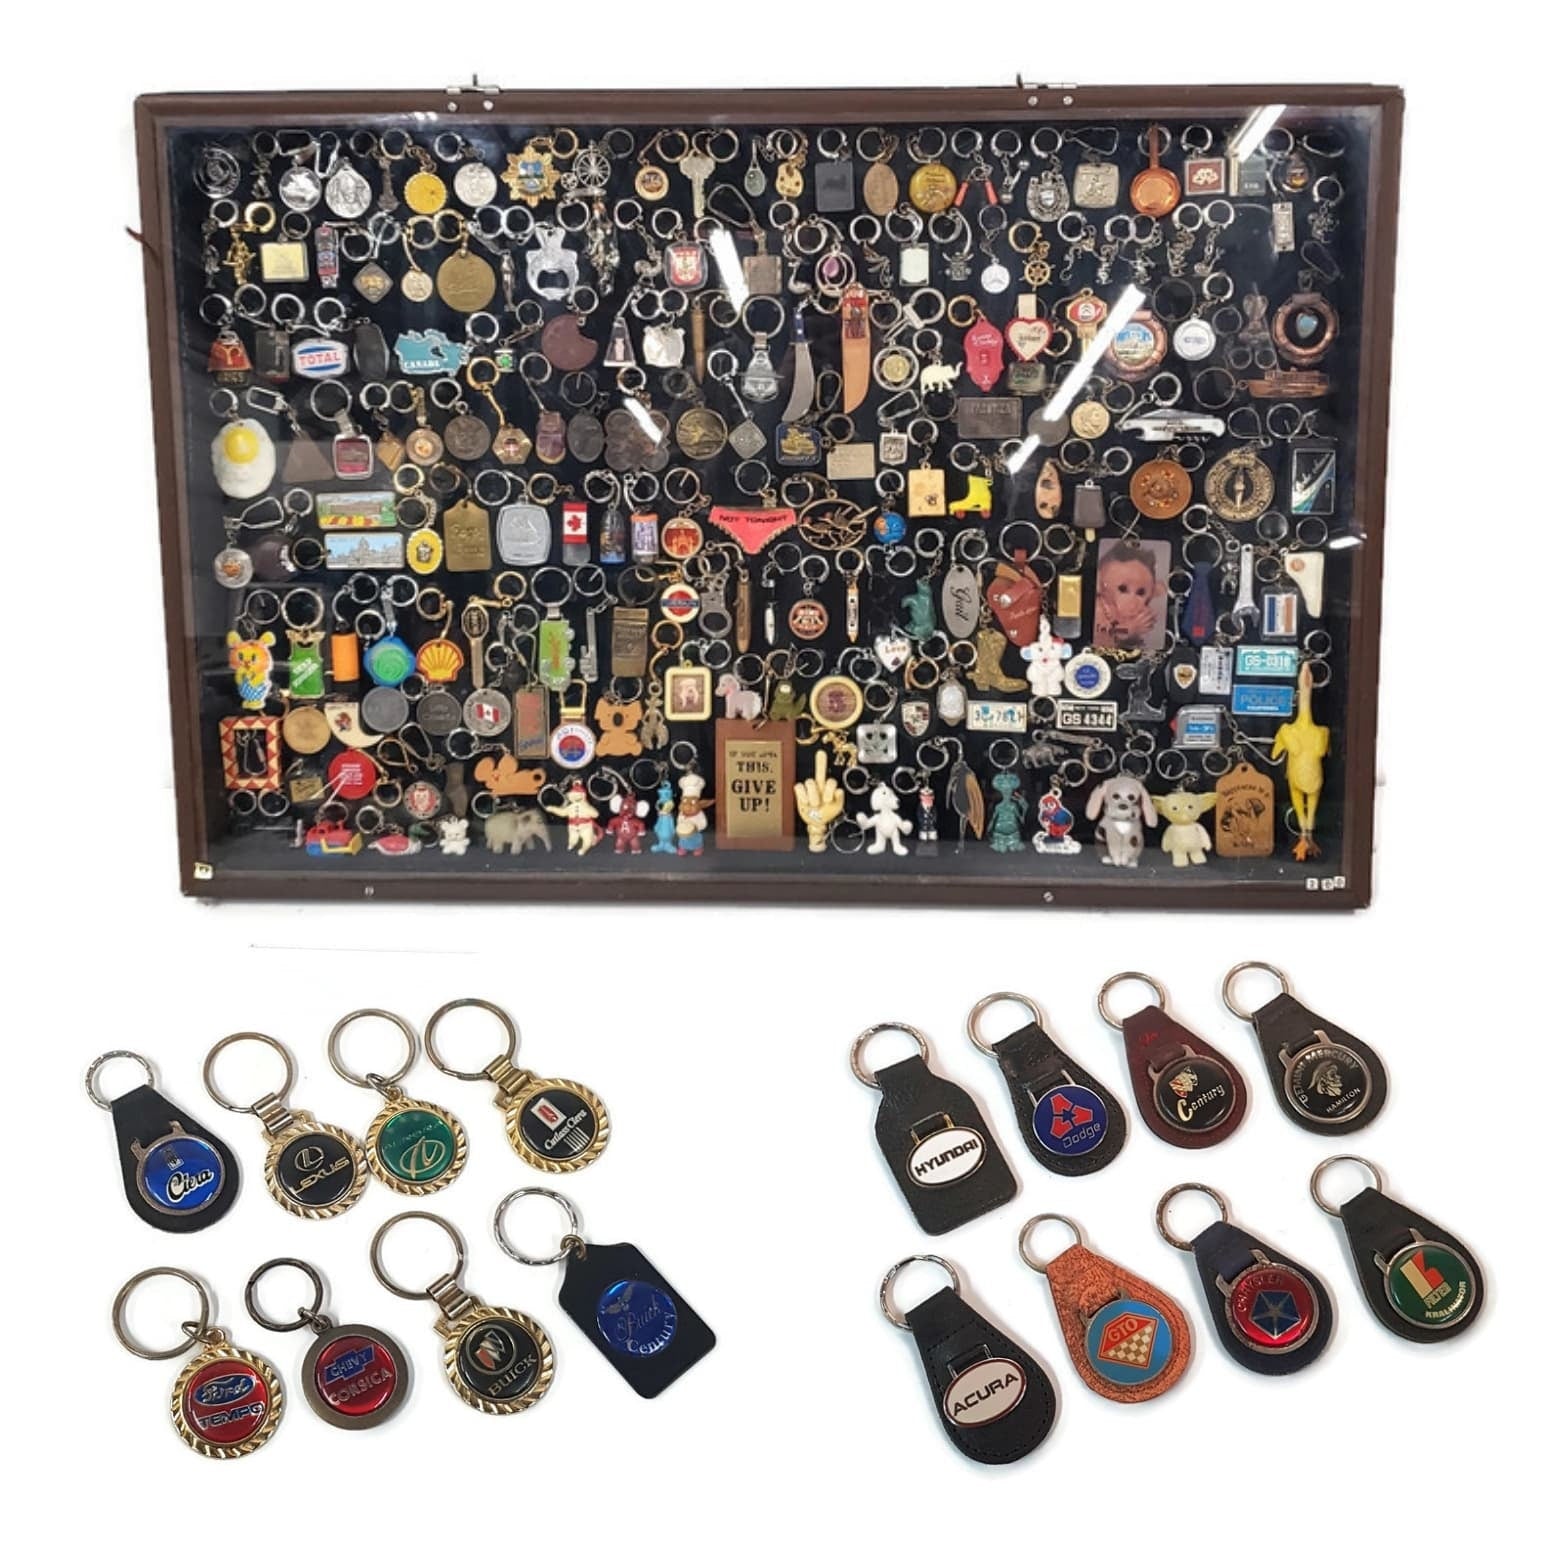 mercury cougar key chain keychain key fob keytag vintage automotove keychain gift collectible